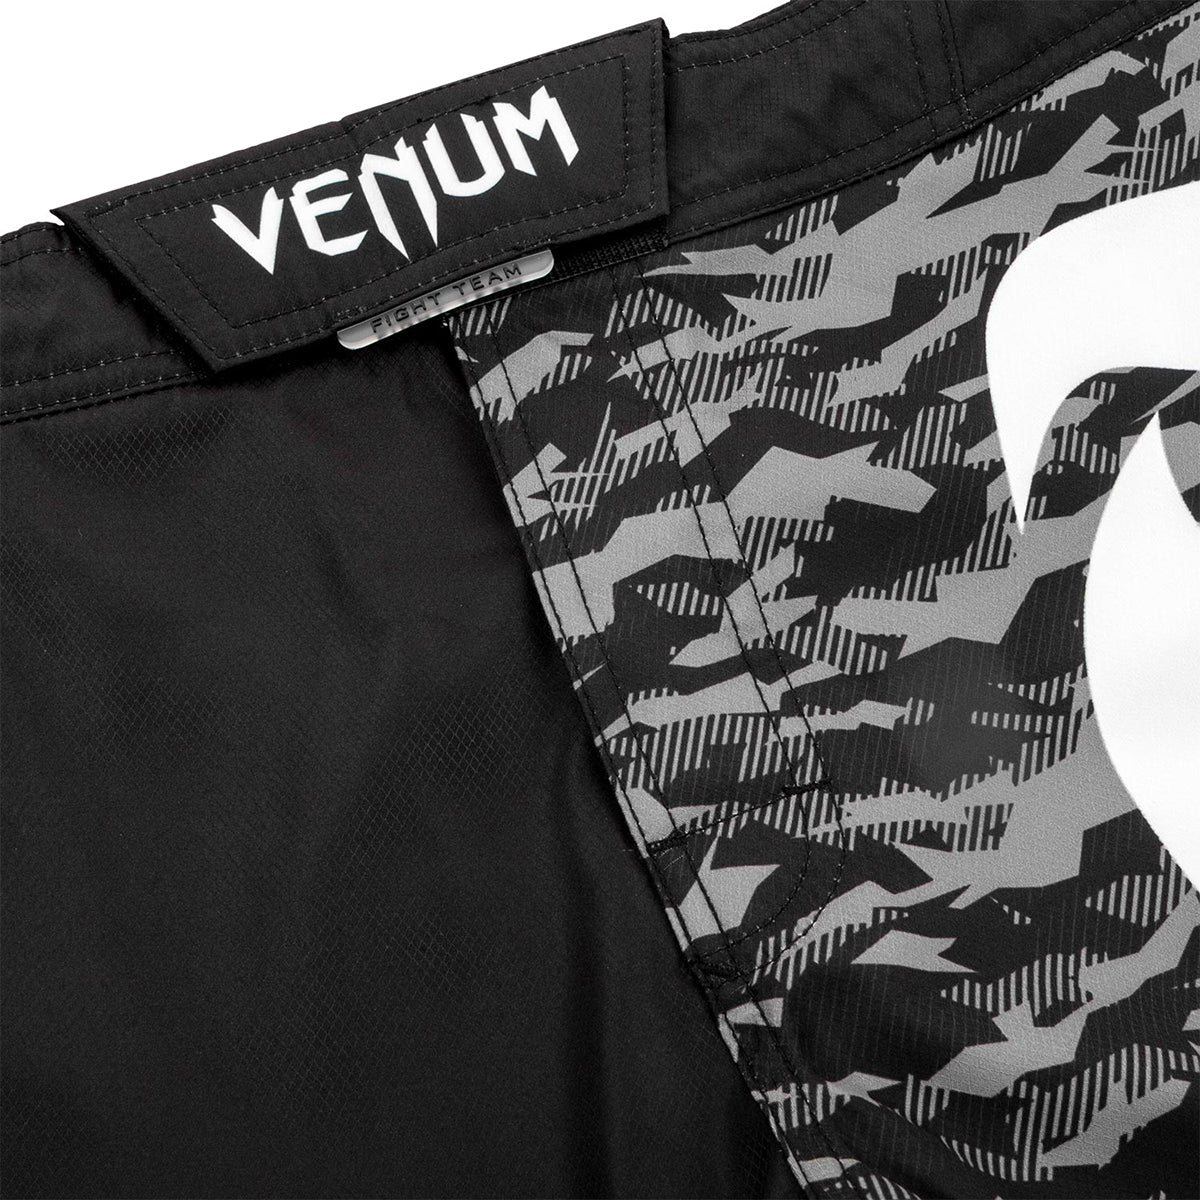 Venum Light 3.0 MMA Fight Shorts - Black/Urban Camo Venum